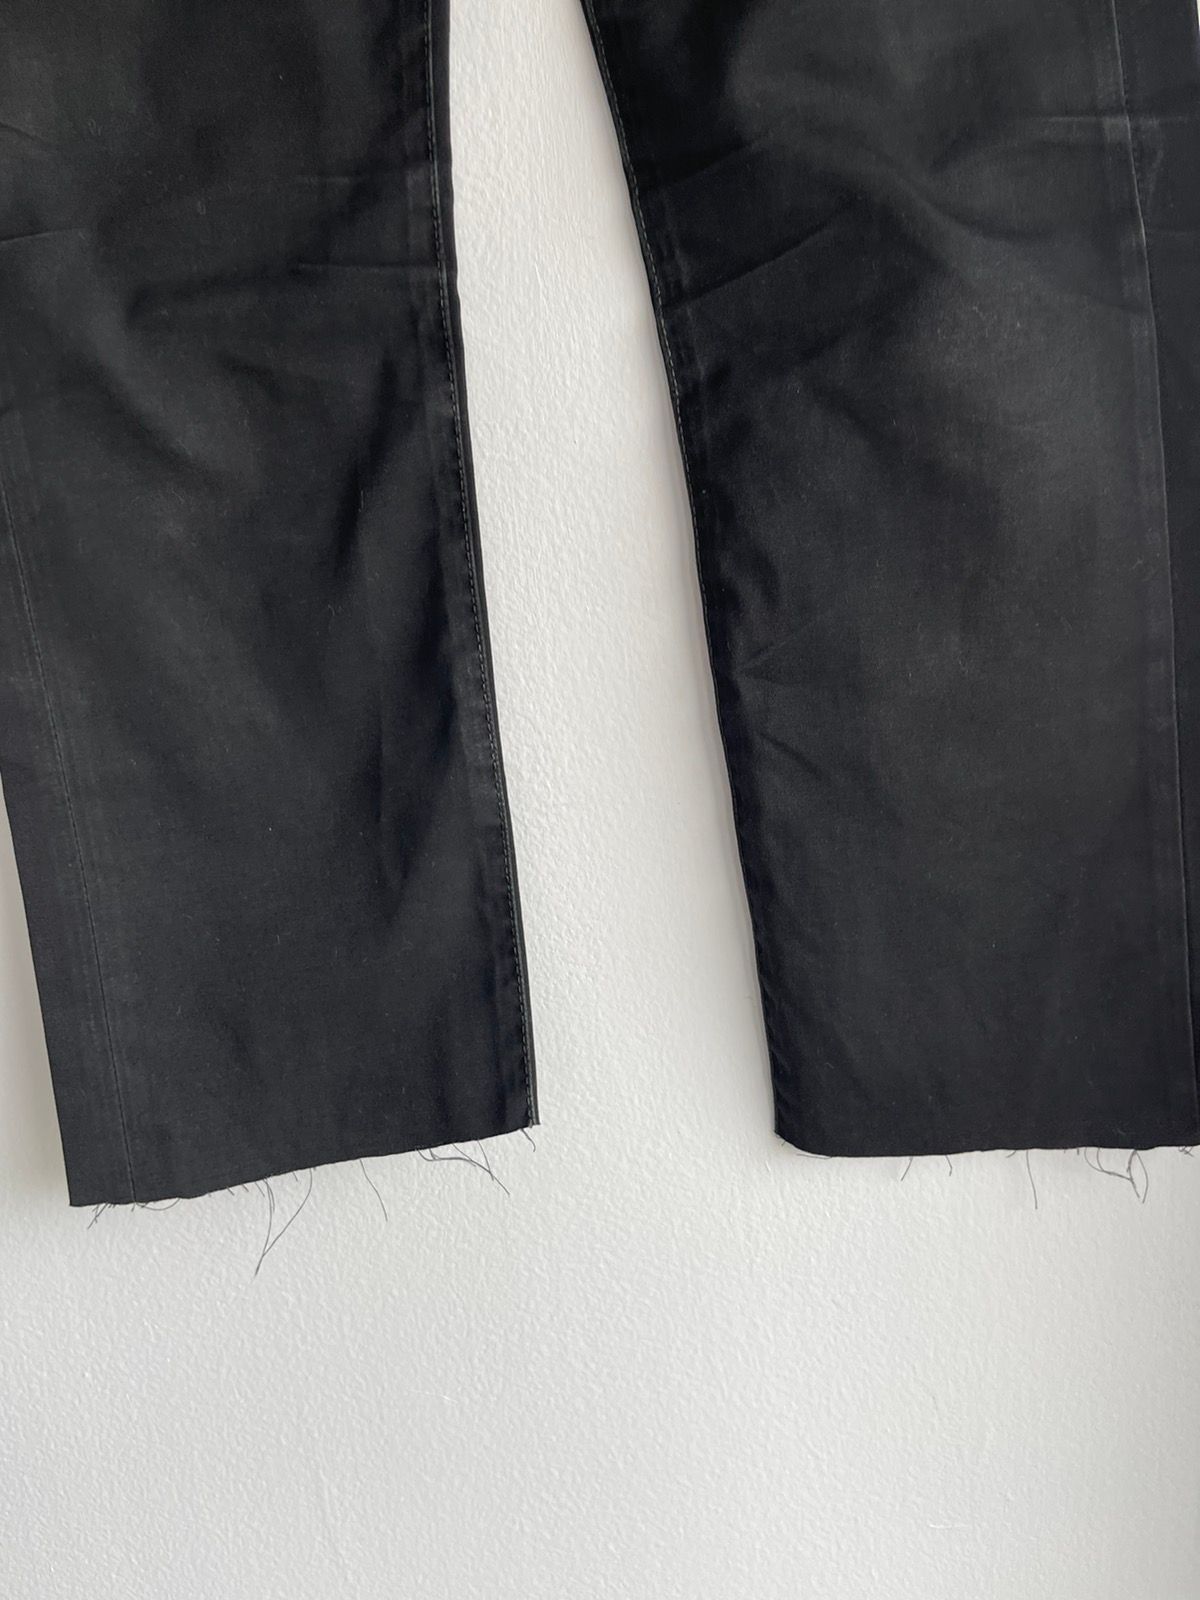 Dior Homme 05 Black Cropped Raw Hem Denim Jeans